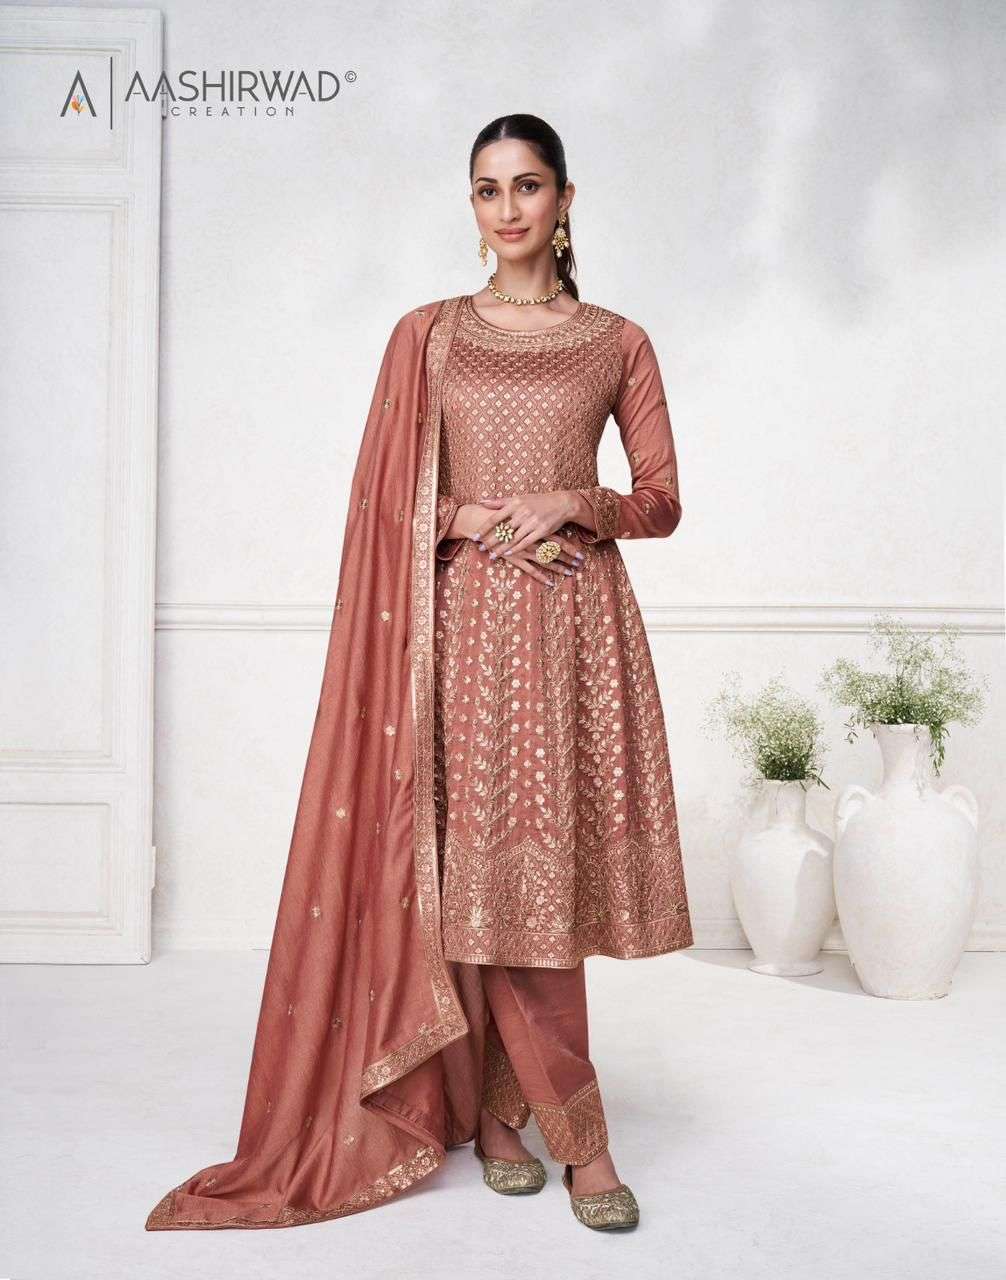 Aashirwad Gulkand Sargam Premium Silk Designer Salwar Suits Wholesale catalog